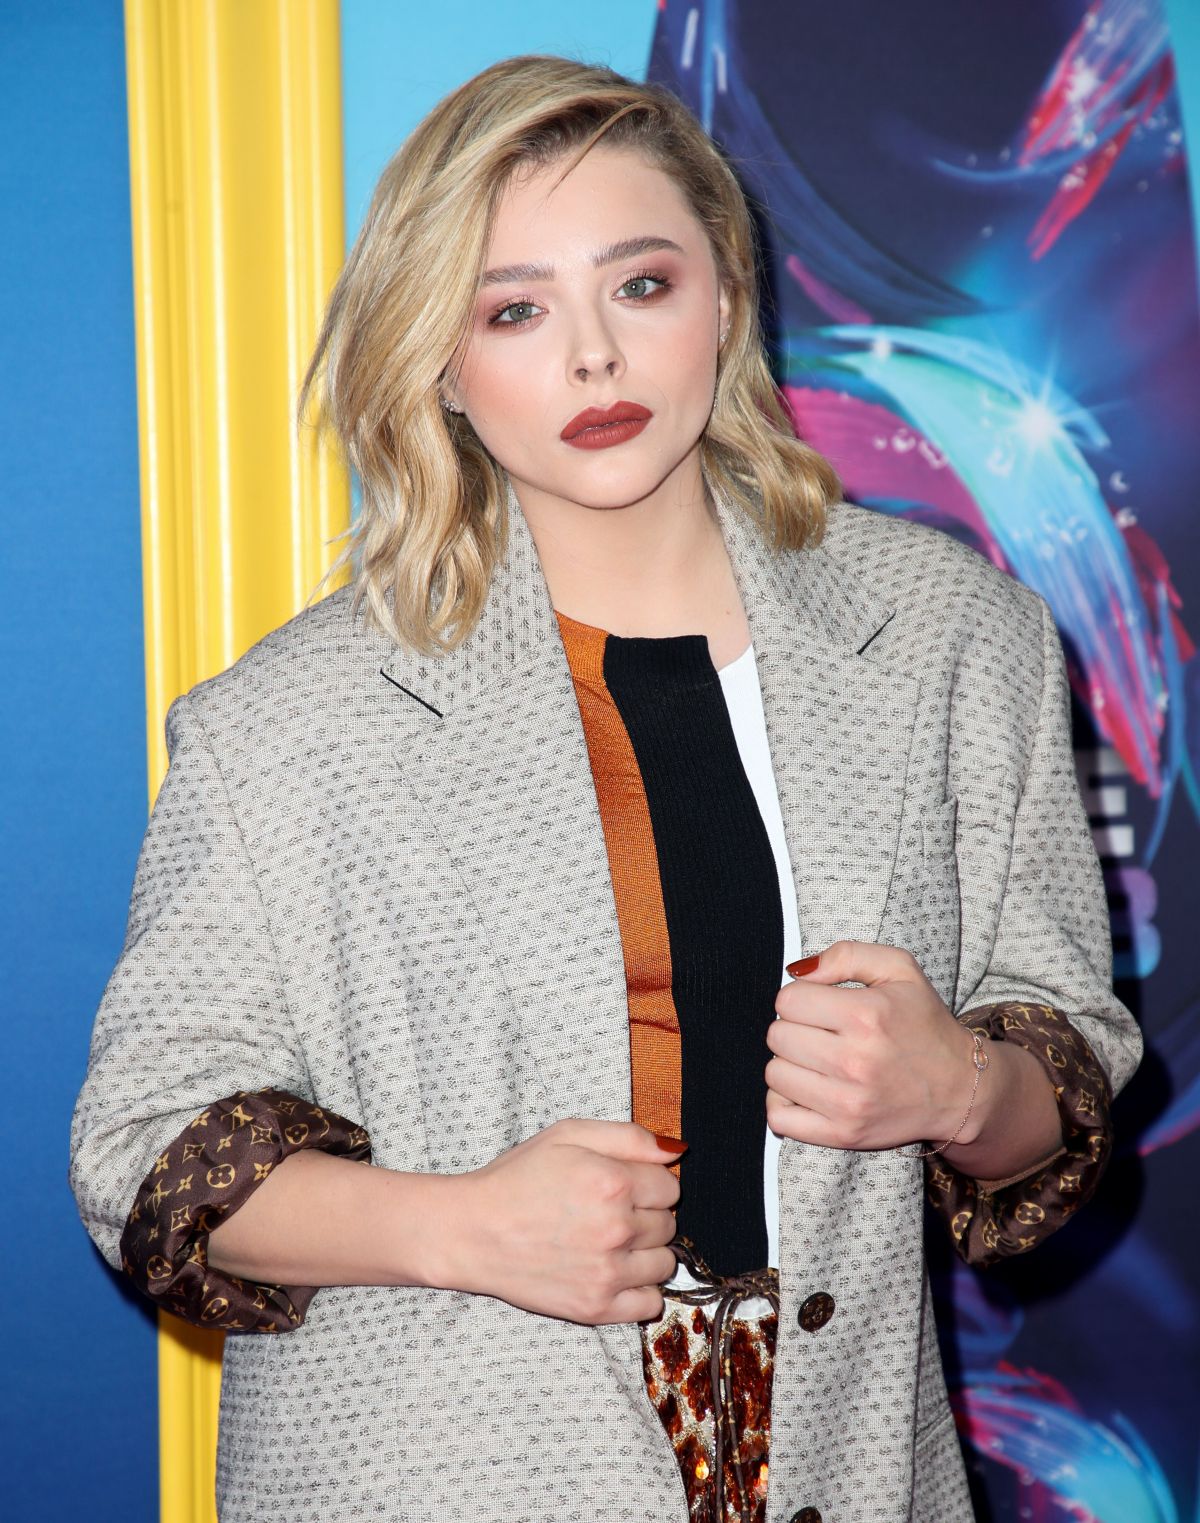 Chloe Moretz in Louis Vuitton at the 2018 Teen Choice Awards